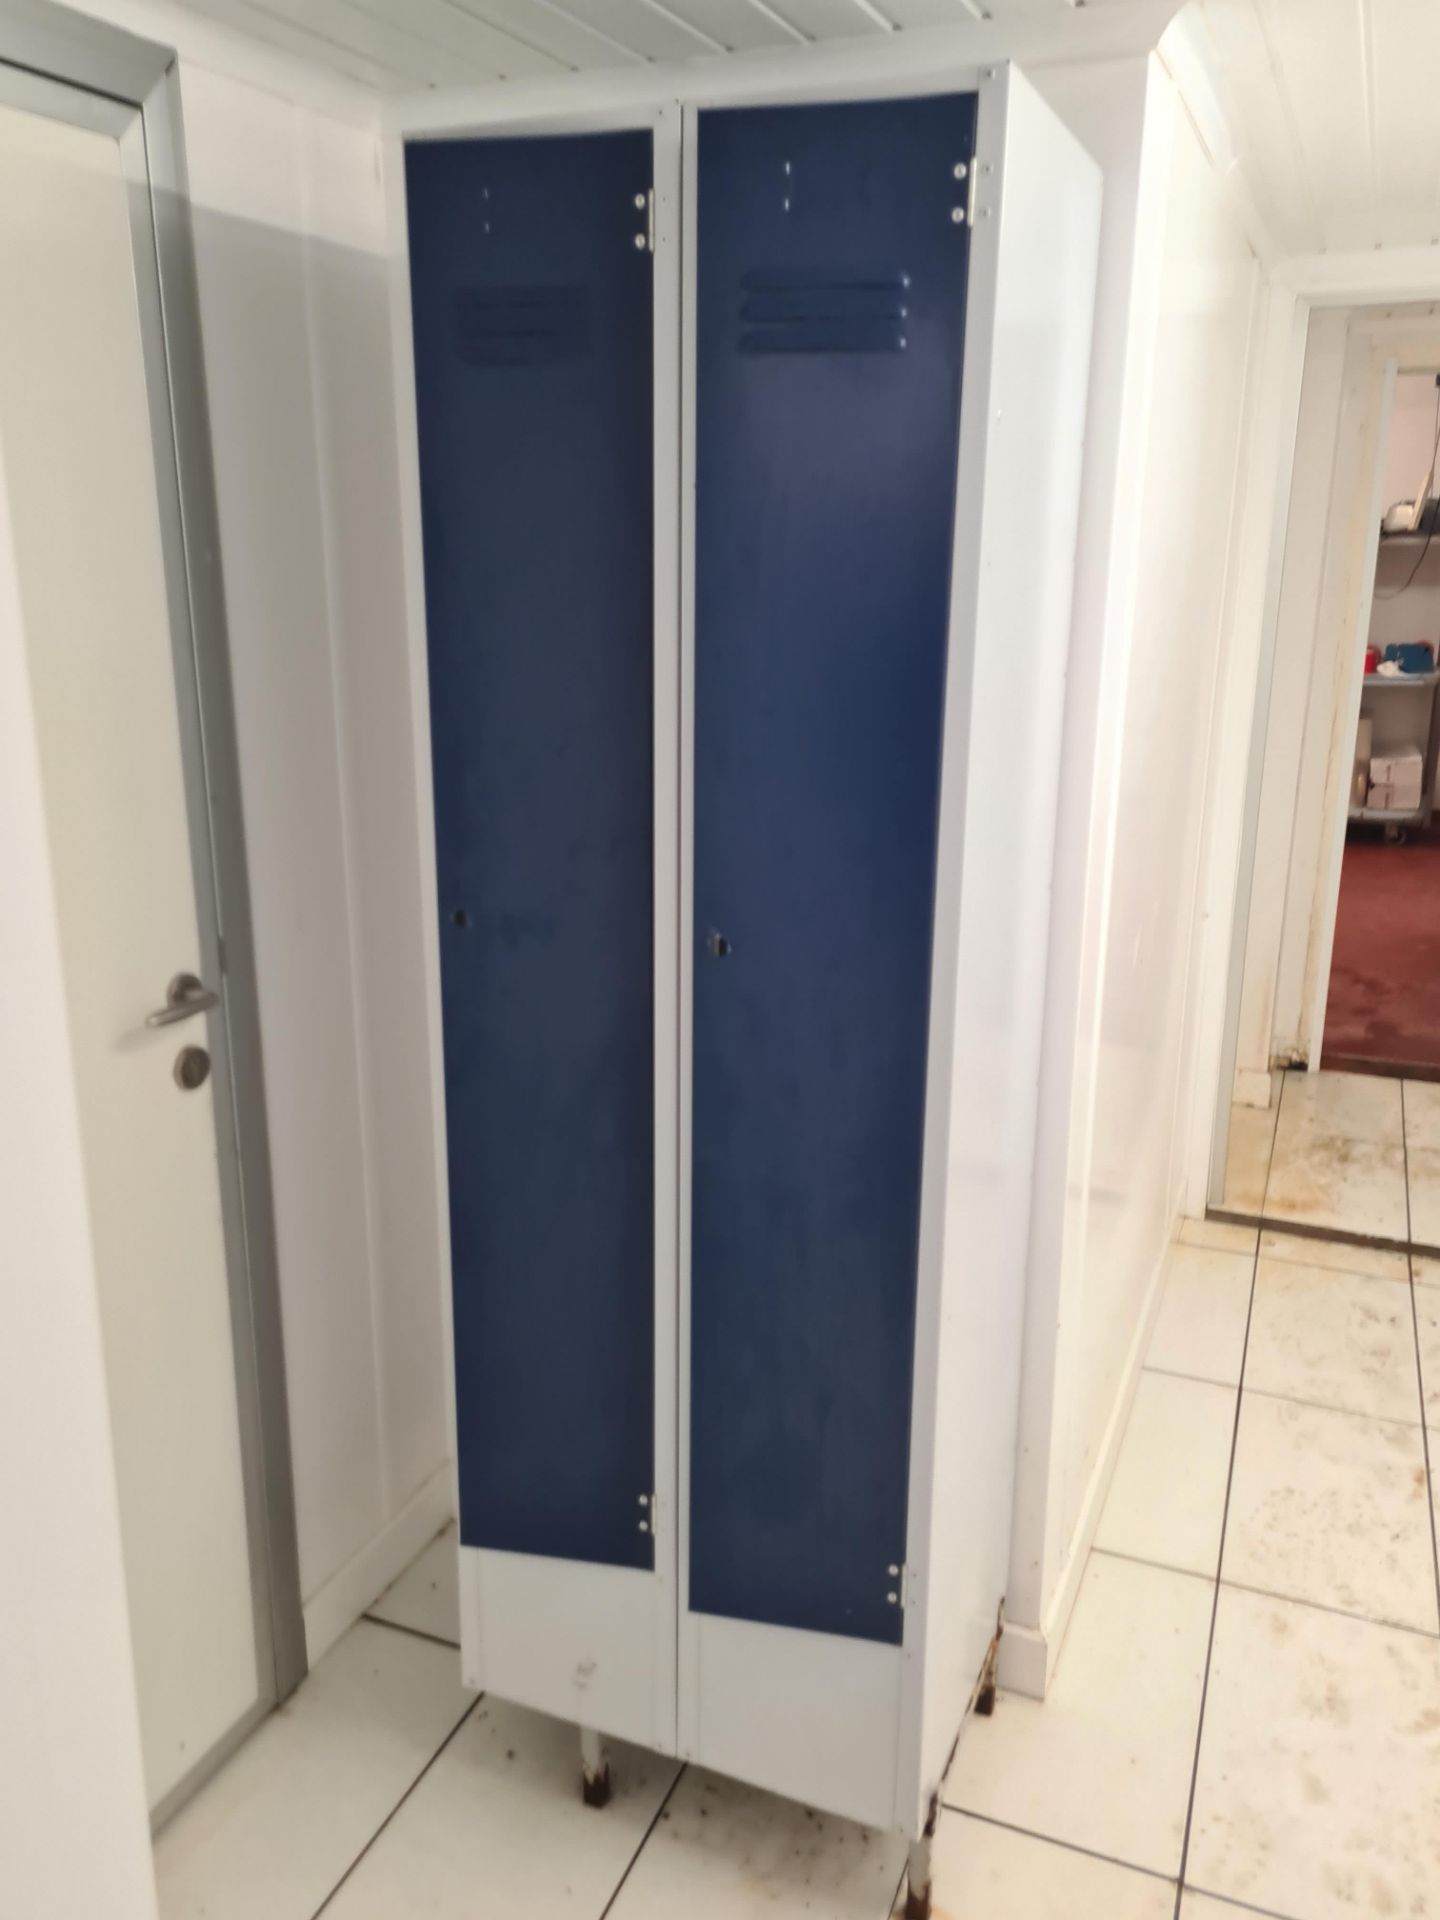 Ten Grey and Blue Metal Personal Lockers (No Keys) - Image 2 of 3